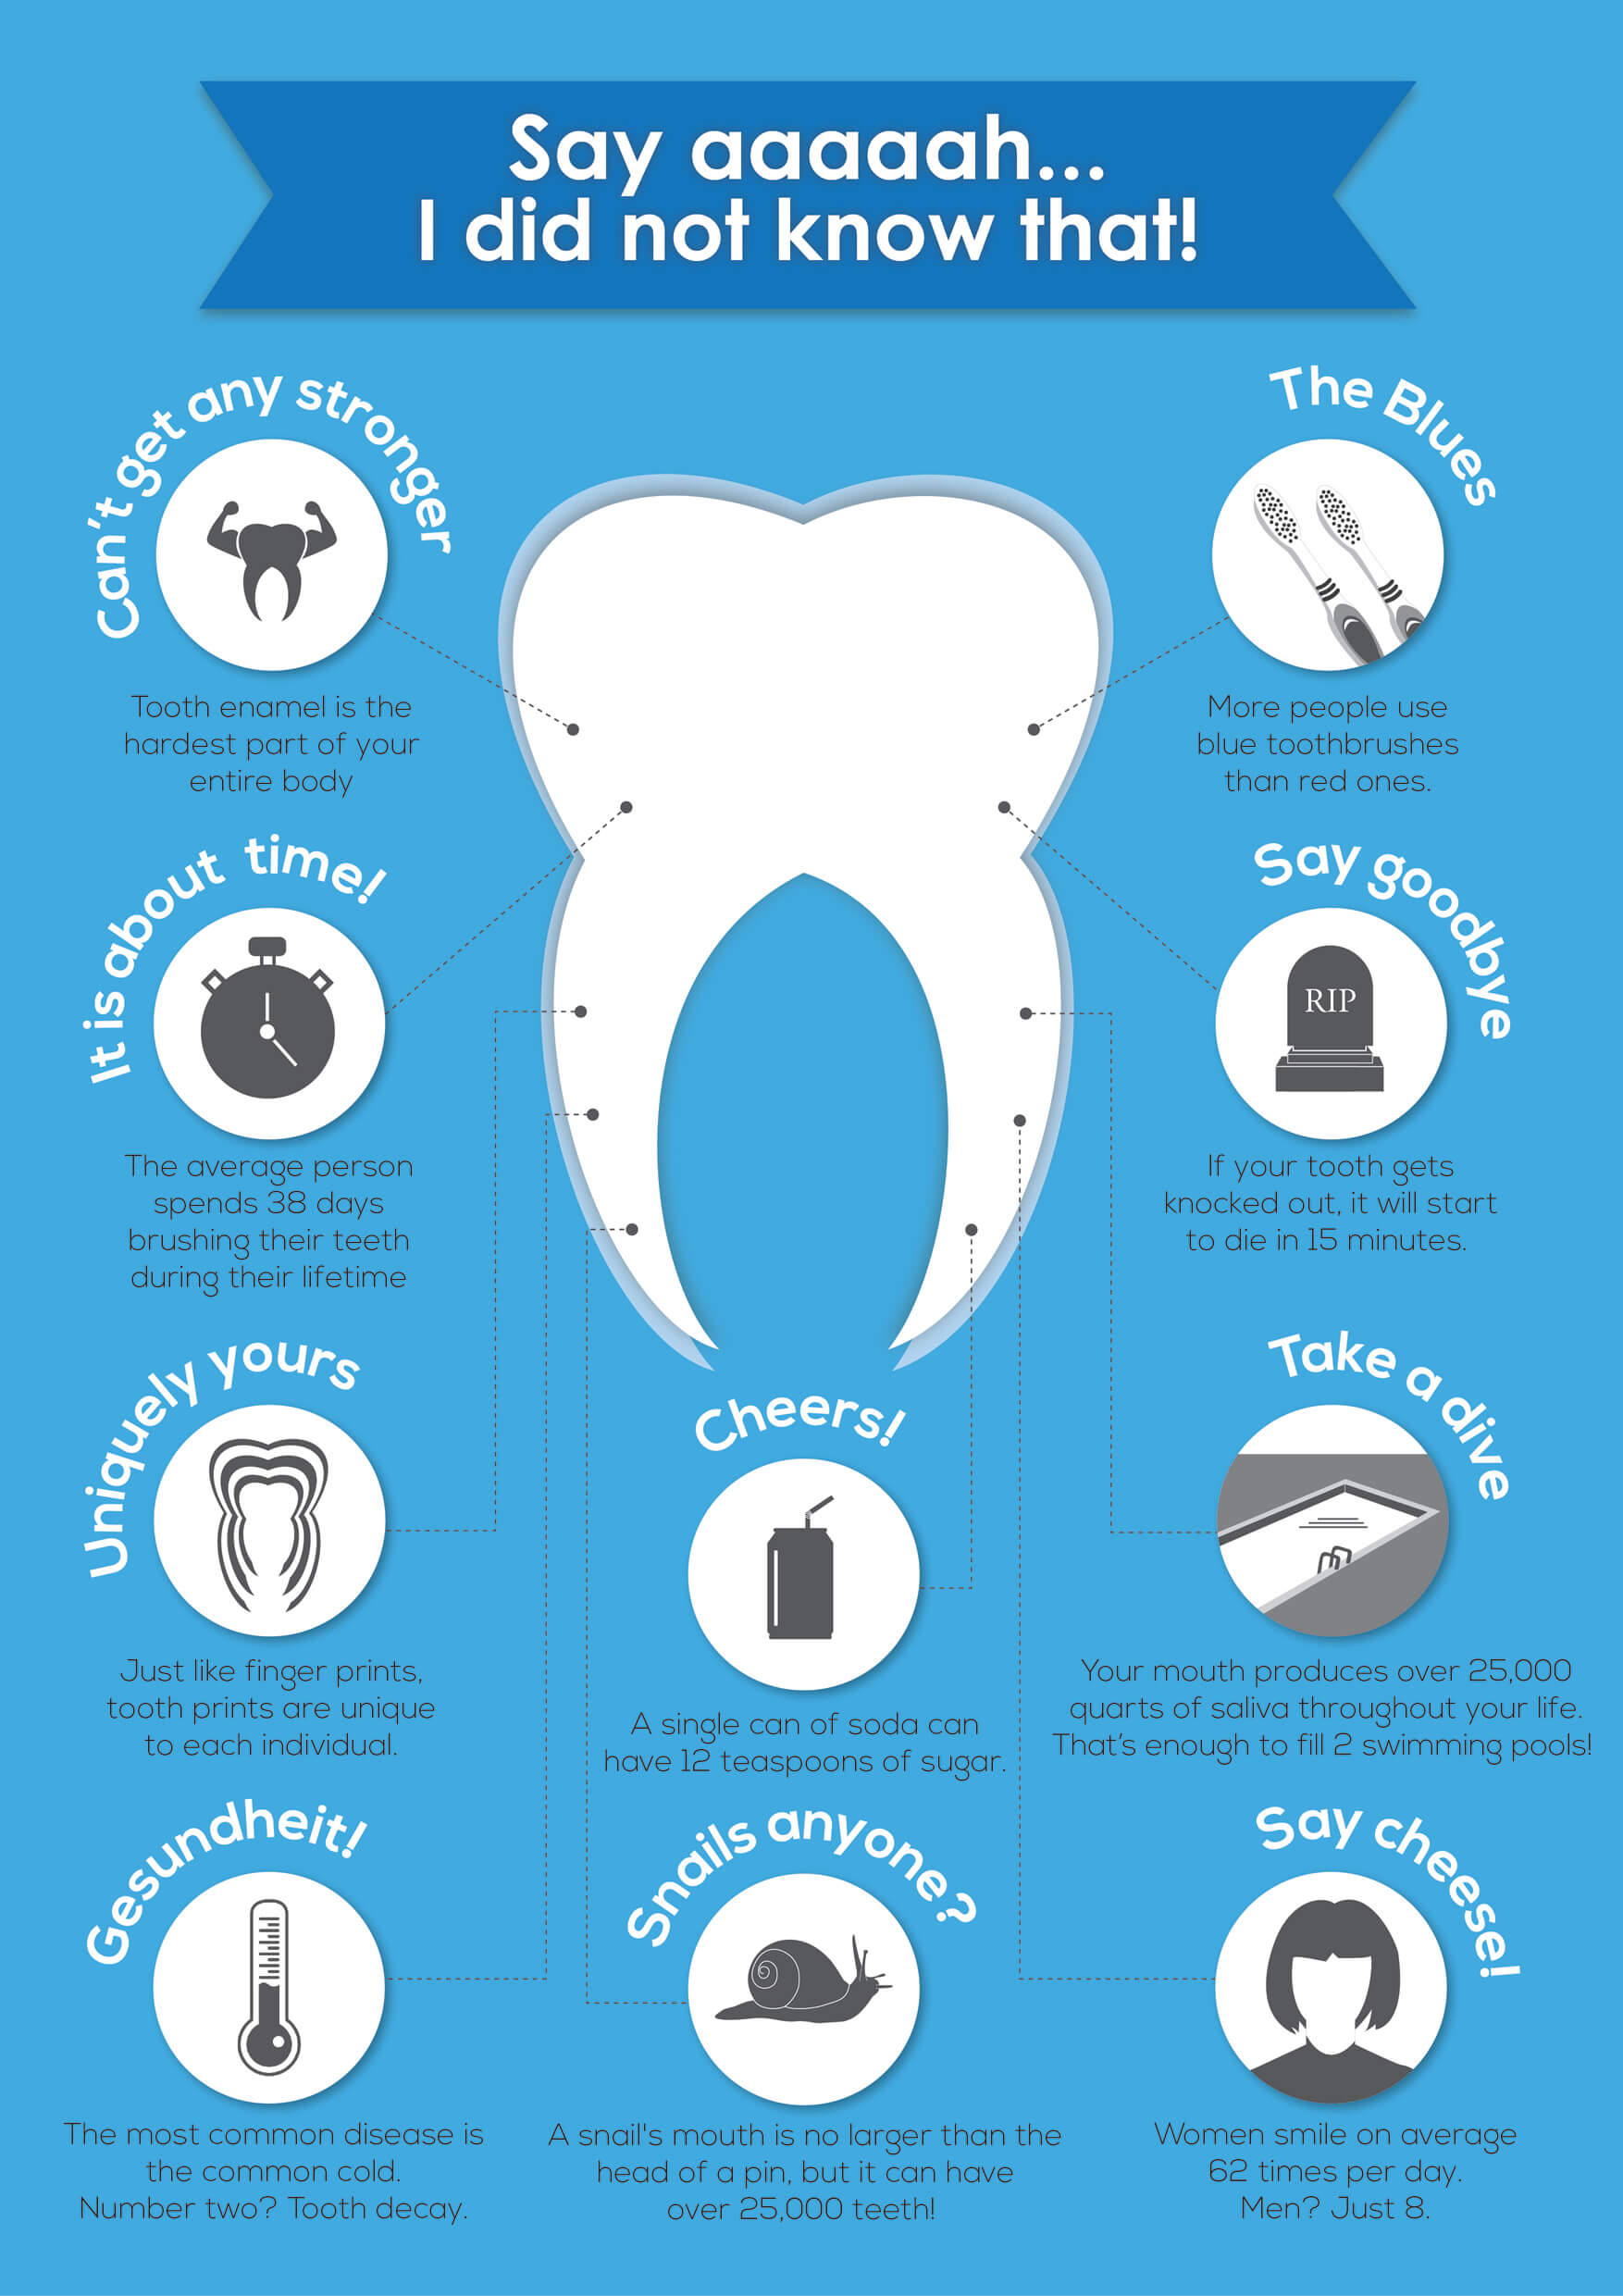 teeth-tips-infographic-plaza